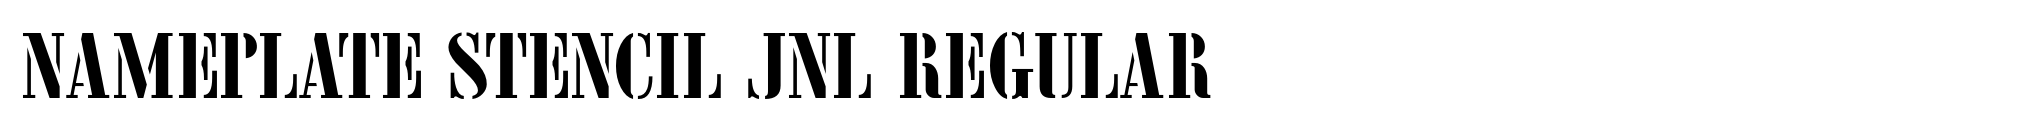 Nameplate Stencil JNL Regular image